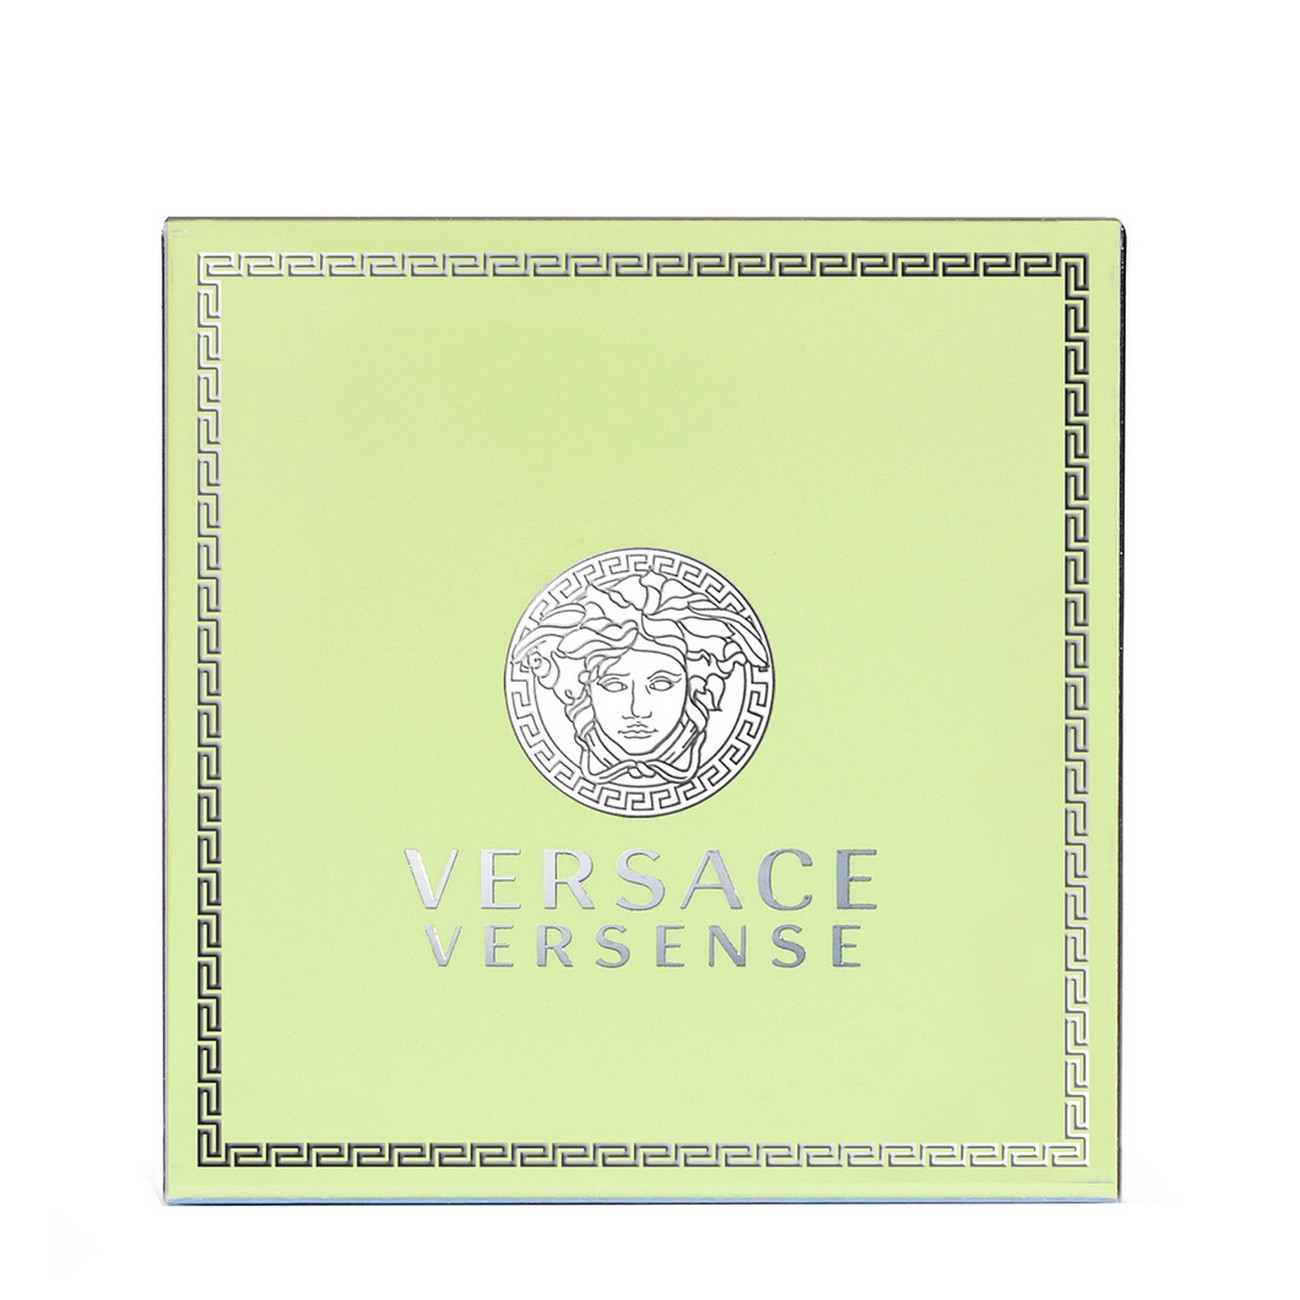 Versace Versense Eau de Toilette 50ml